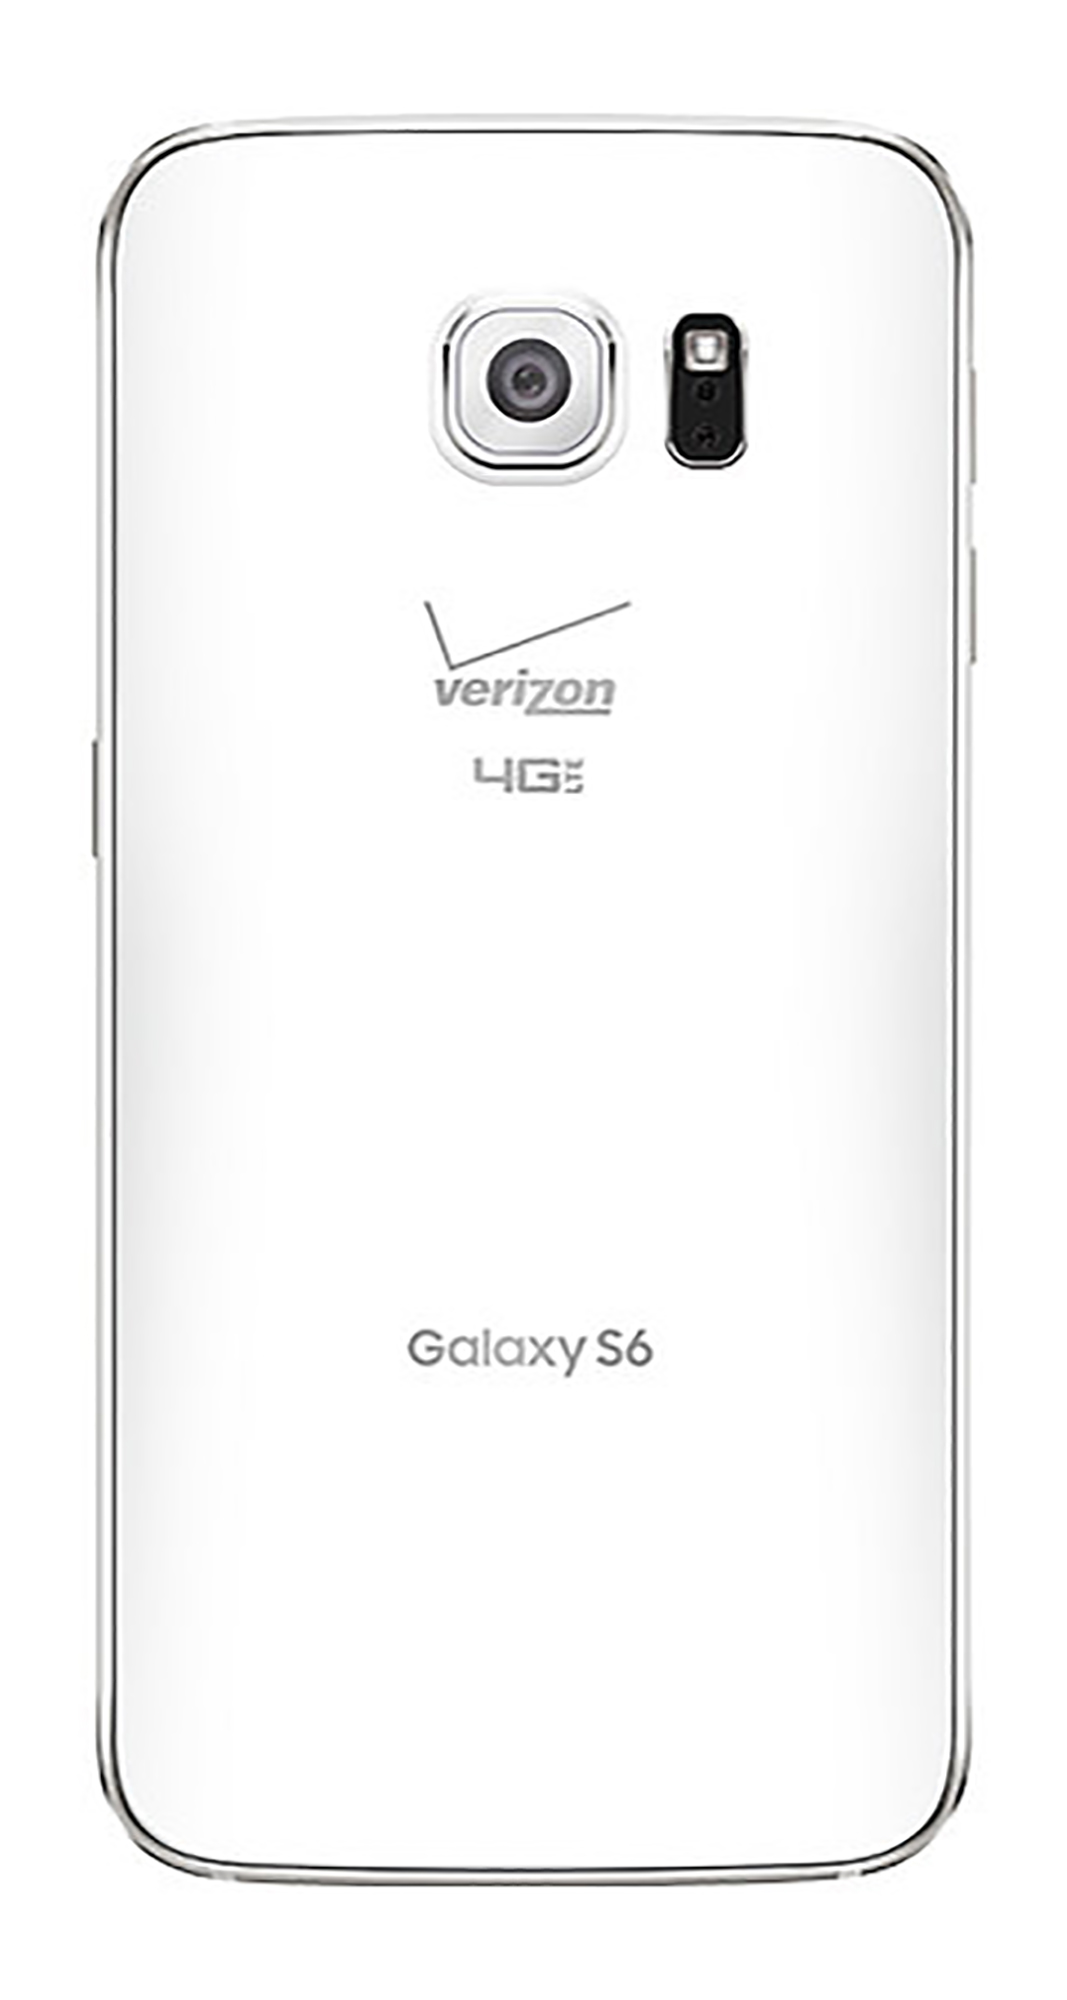 Samsung Galaxy S6 G920V 32GB Verizon CDMA 4G LTE Octa-Core Android Phone w/ 16MP Camera - White (Certified Used) - image 3 of 3